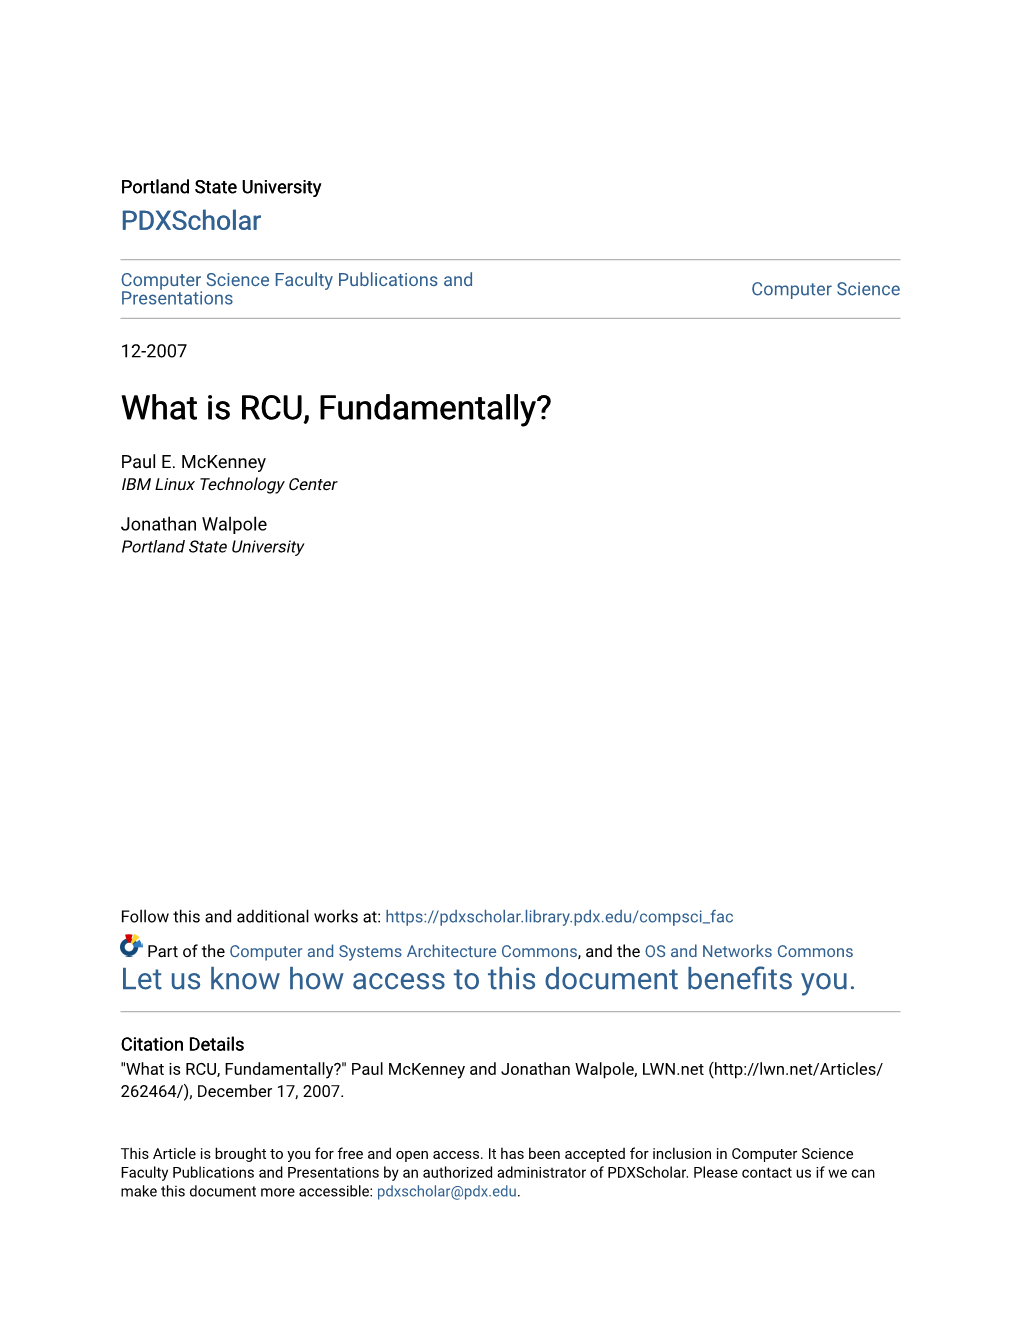 What Is RCU, Fundamentally?